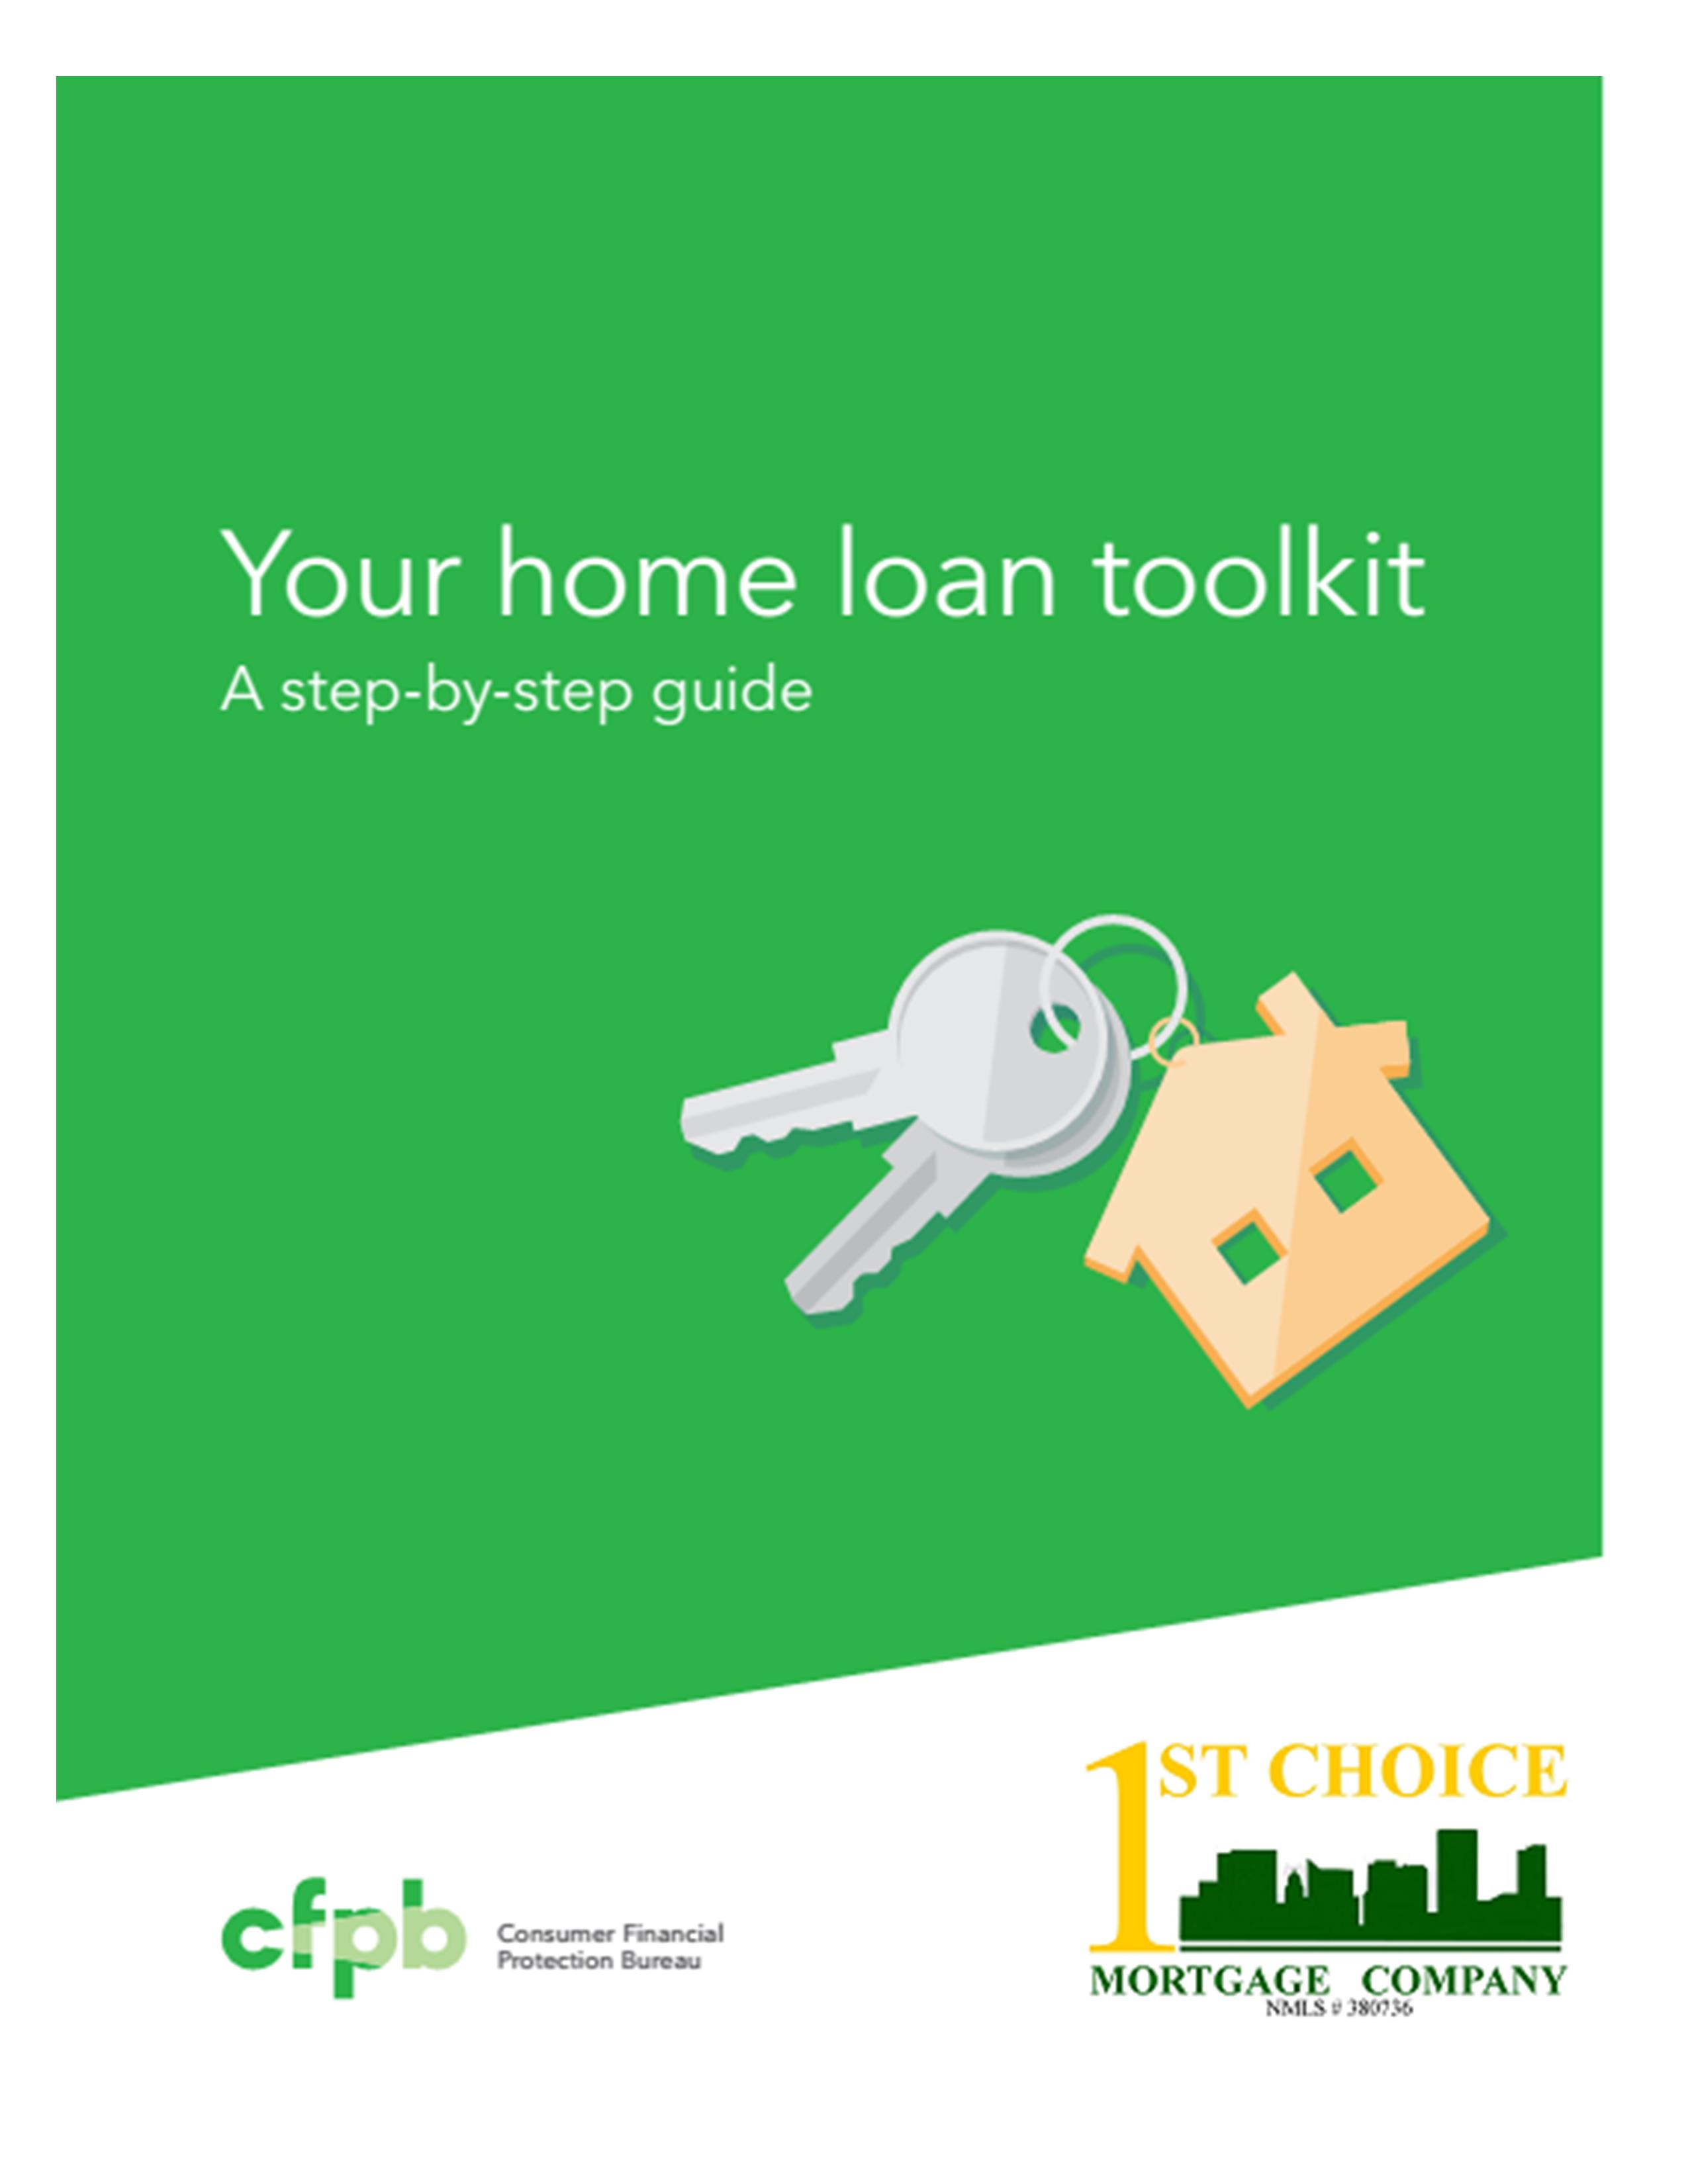 home loan tool kit, mortgage, boise, home loan, nampa, caldwell